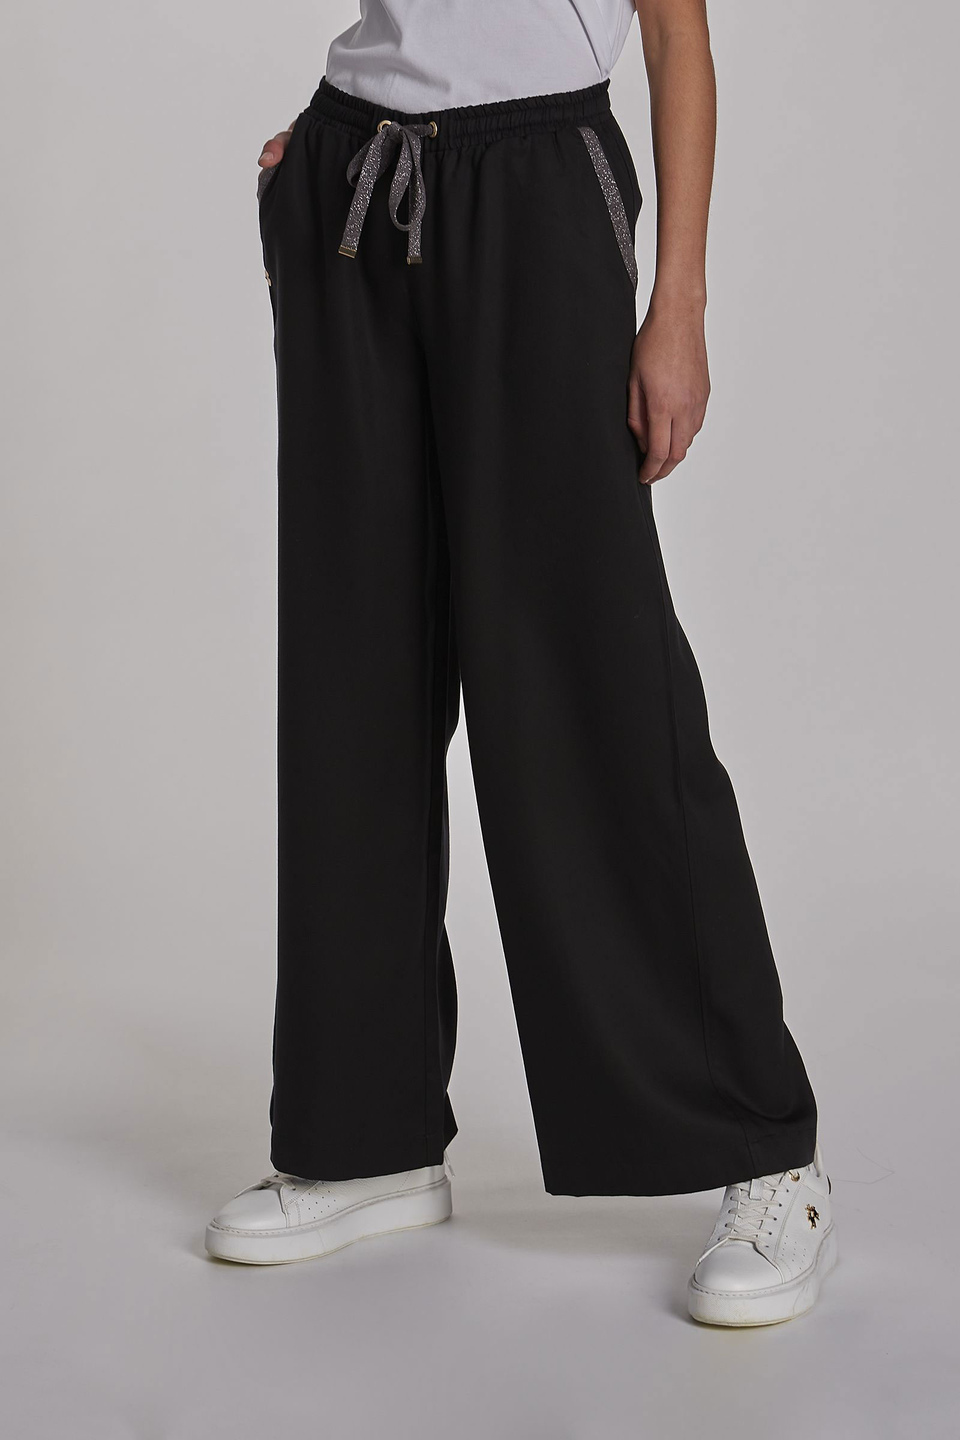 Pantalón de mujer de lyocell, corte regular - La Martina - Official Online Shop